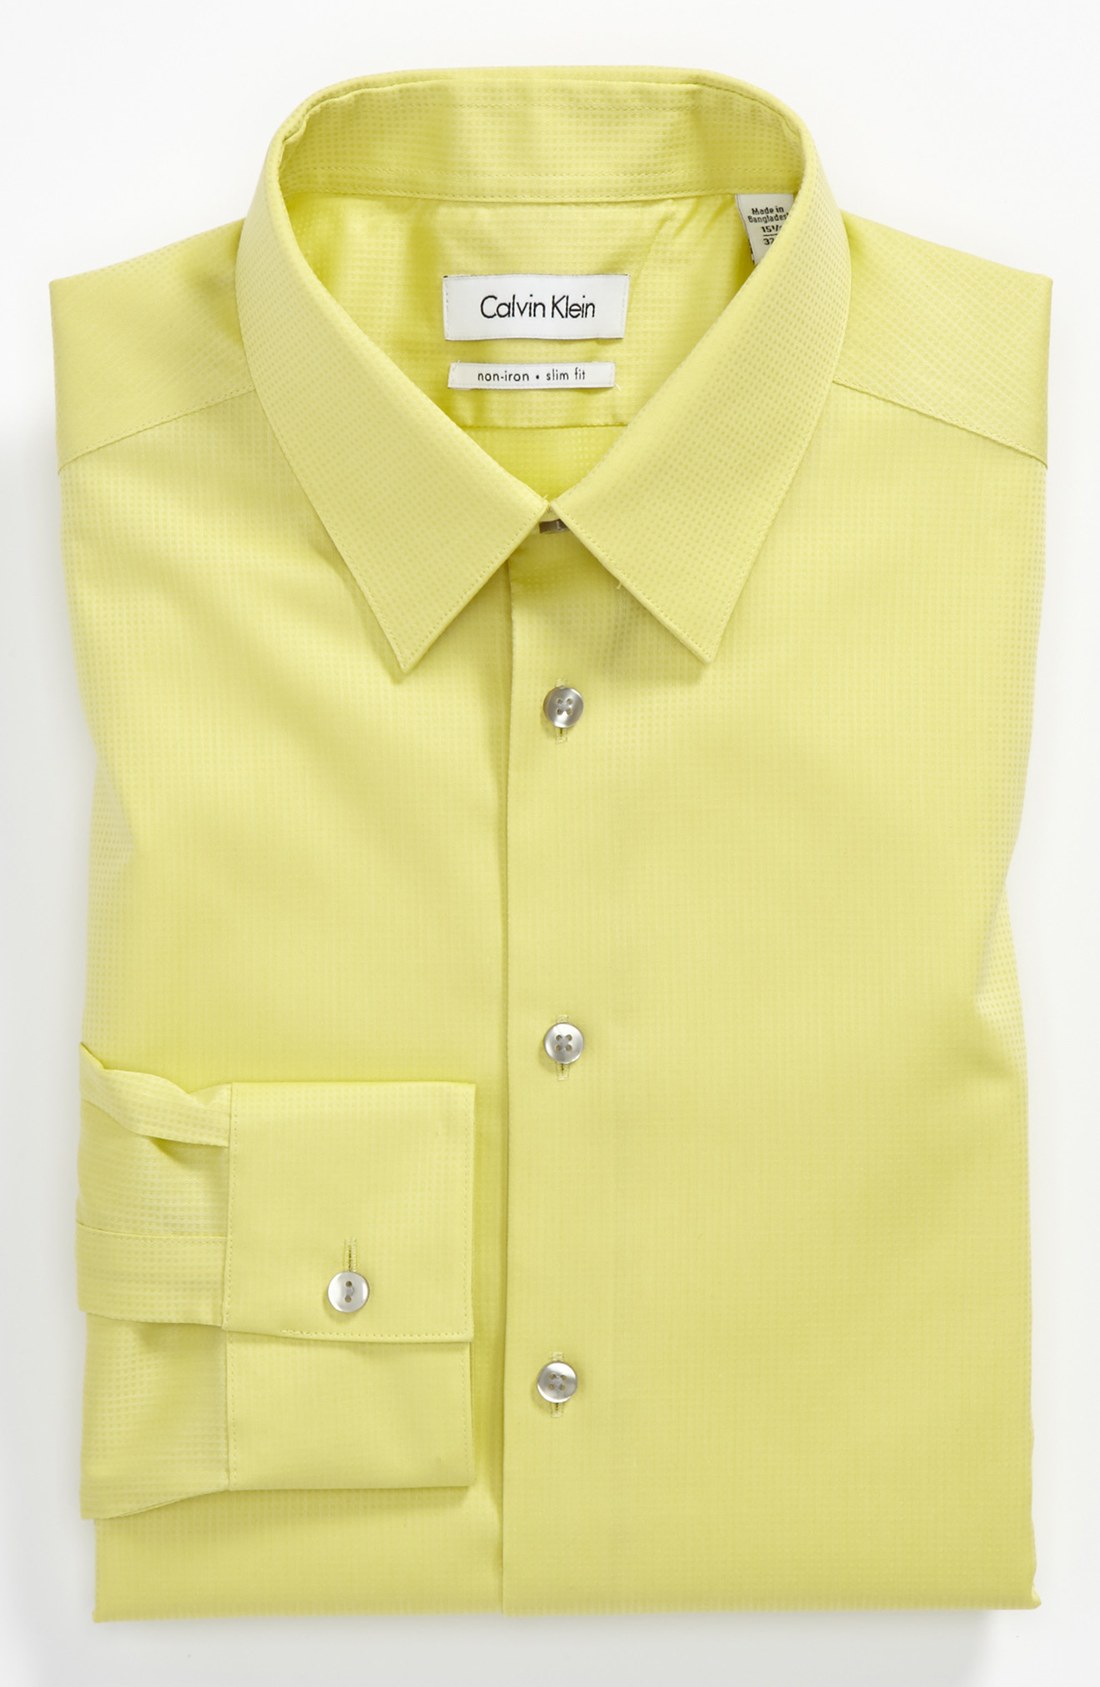 Calvin Klein Miami Check Slim Fit Dress Shirt in Yellow for Men